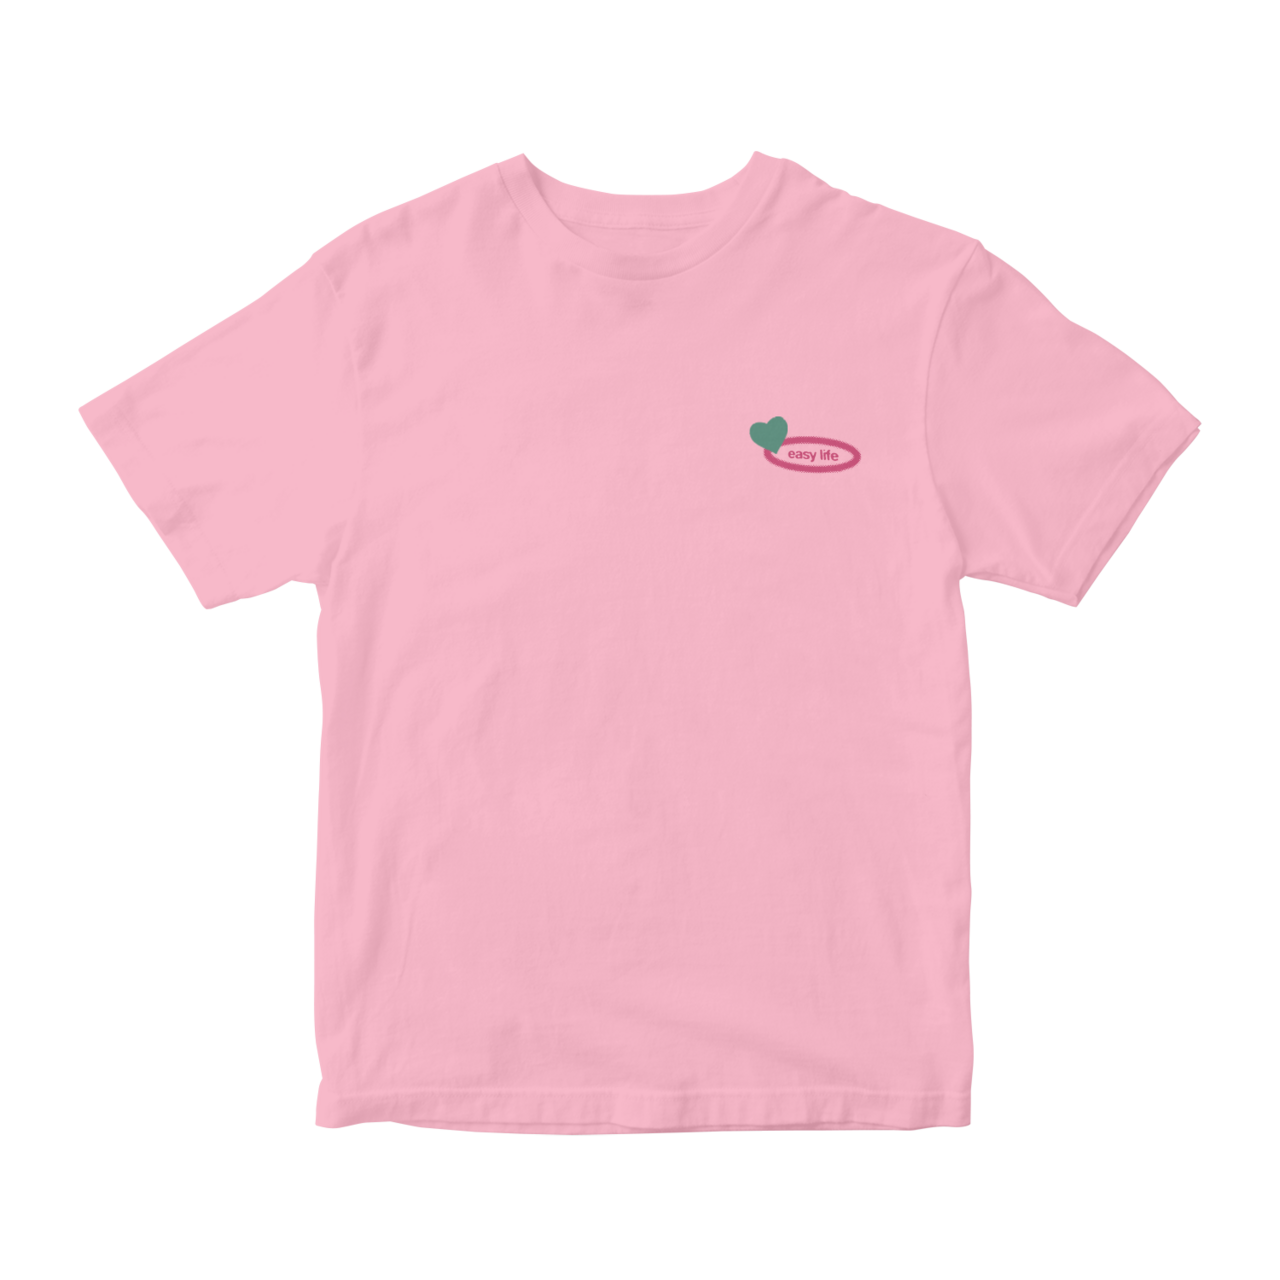 easy life - Trust Exercises Pink/Black T-Shirt